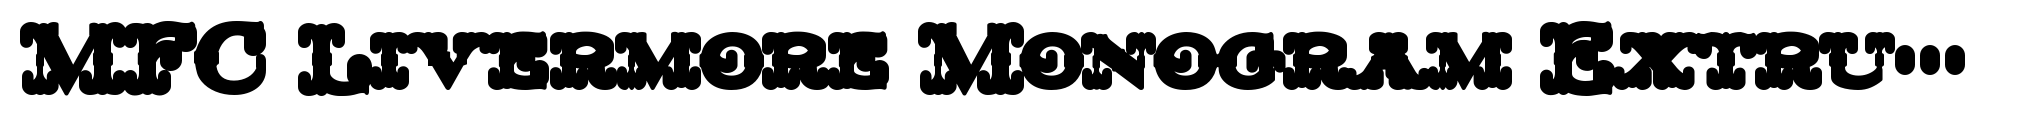 MFC Livermore Monogram Extruded image